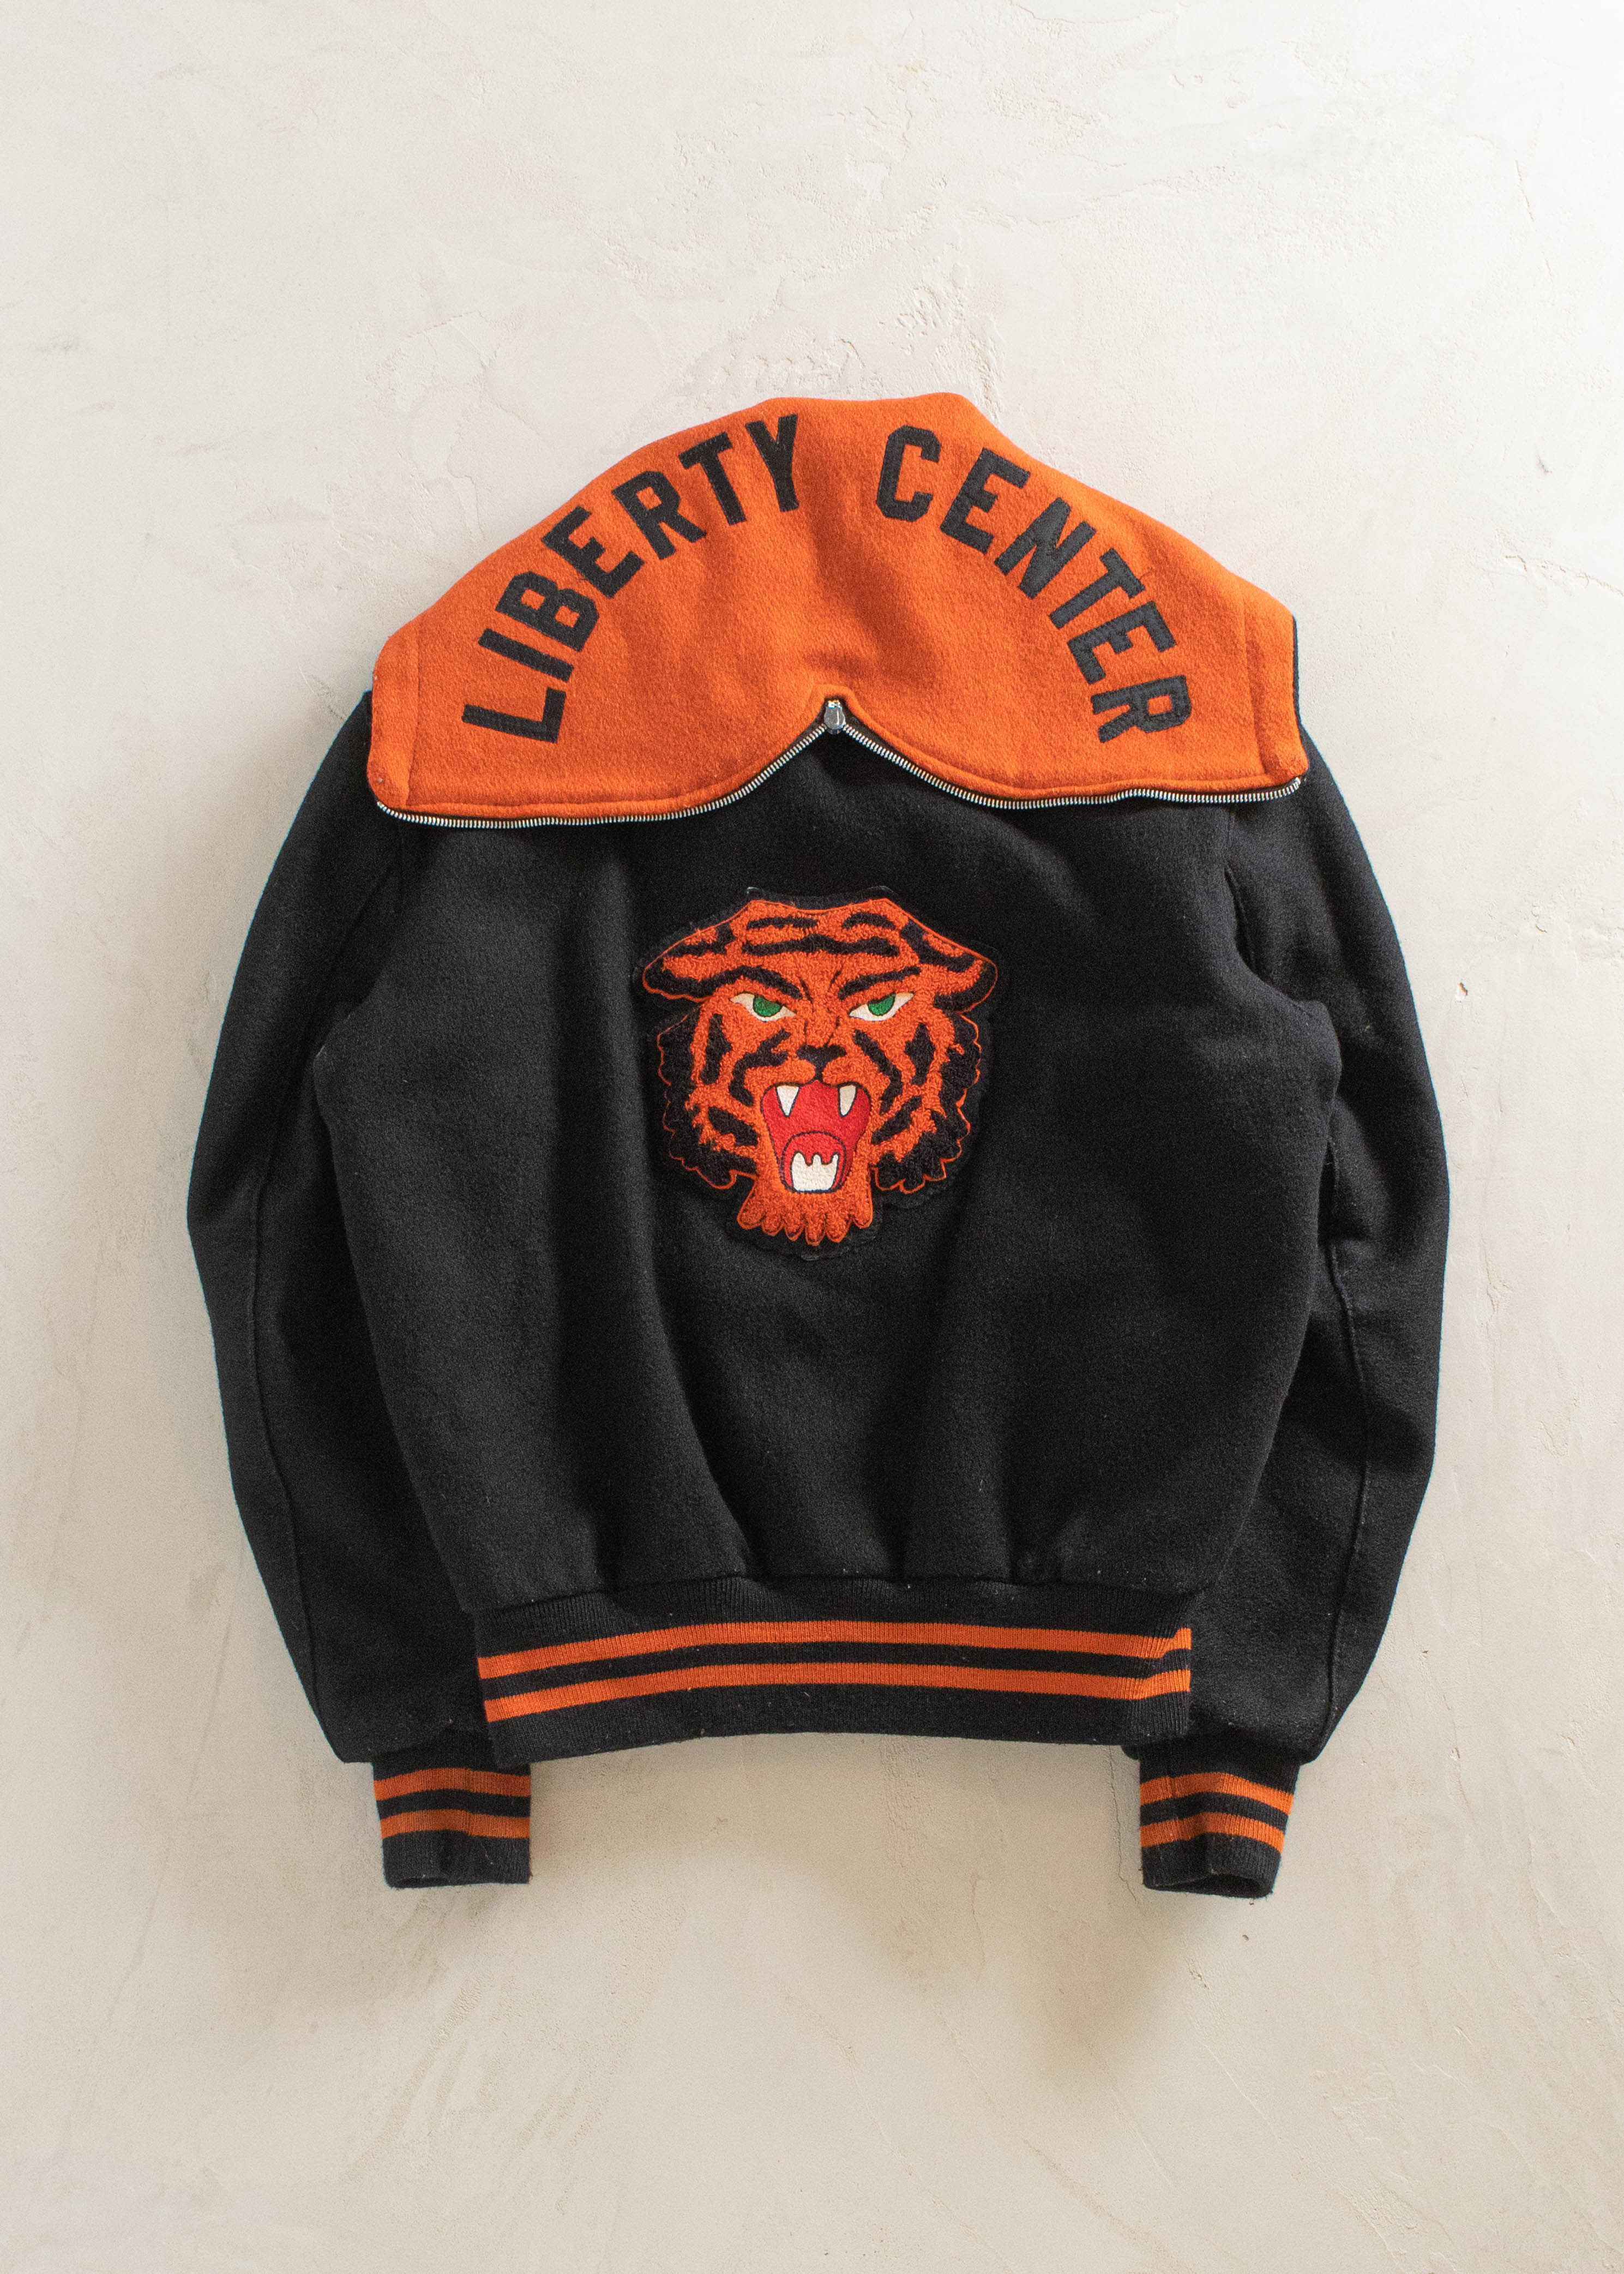 1980s DeLong Liberty Center Cheerleading Varsity Jacket Size M/L ...